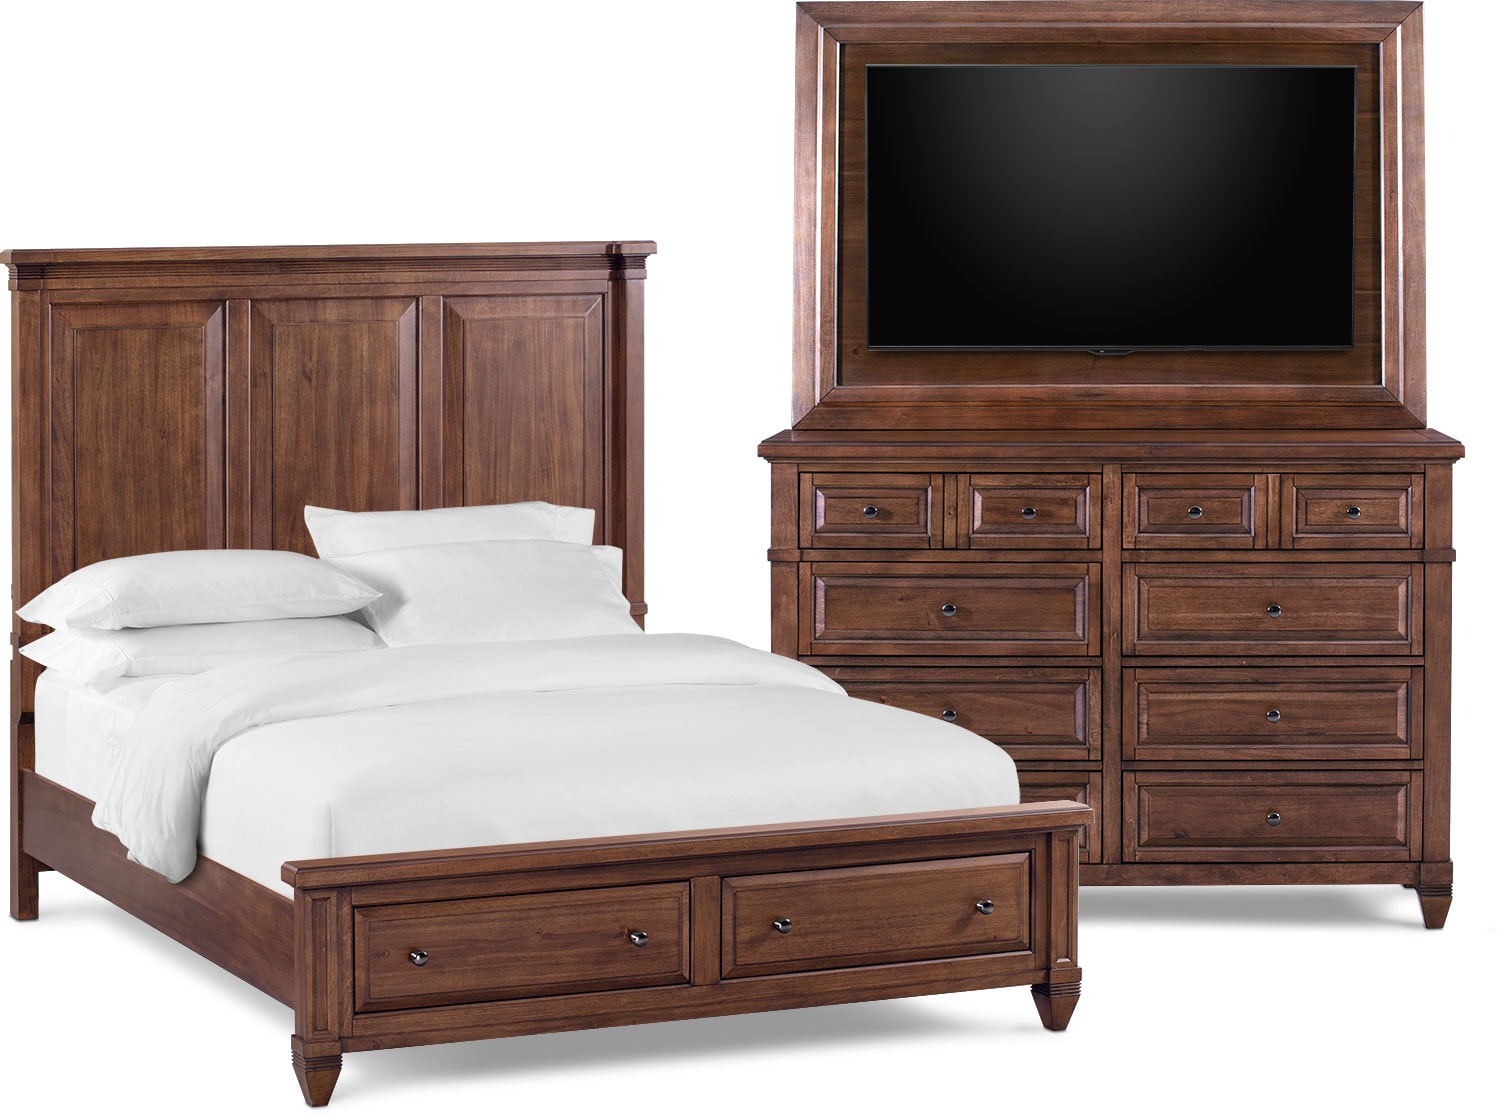 Rosalie 5 Piece Storage Bedroom Set With Dresser And Tv Mount